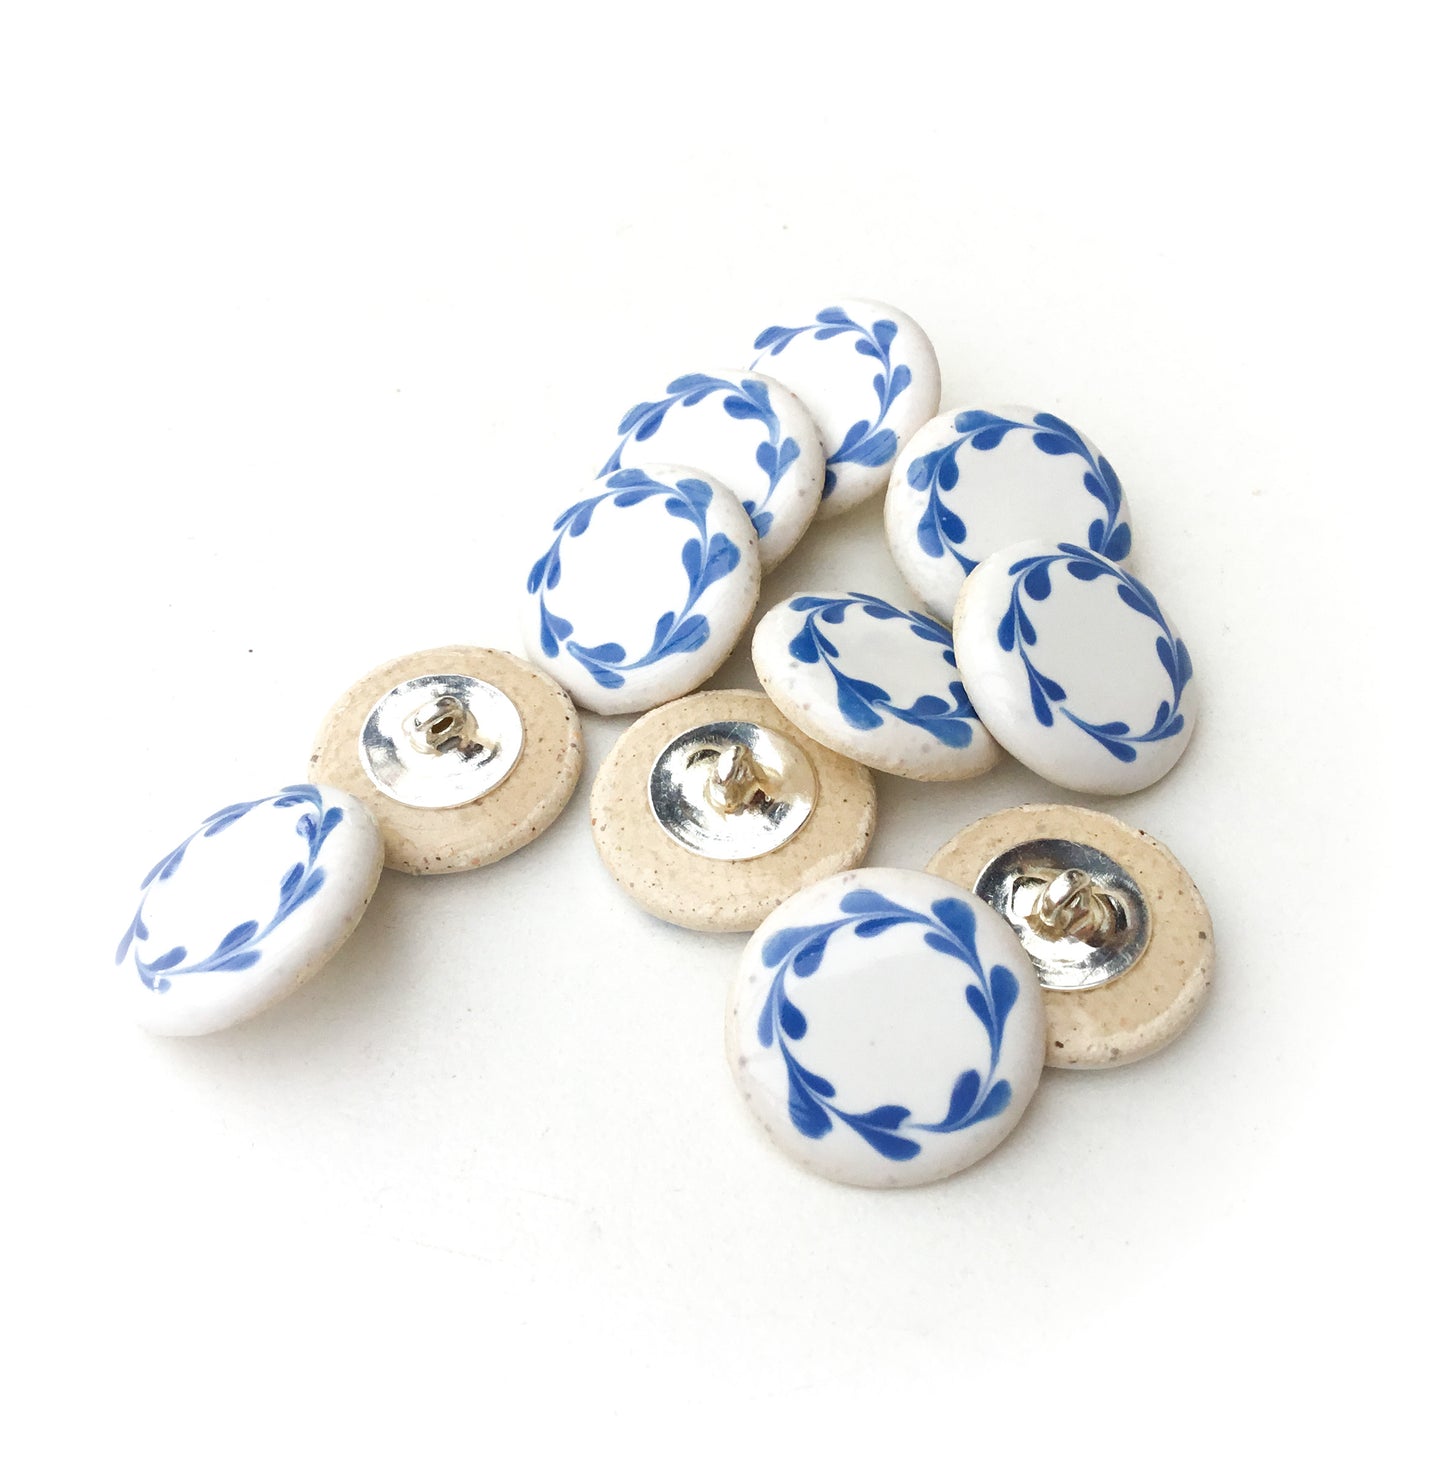 White & Blue Wreath Ceramic Shank Buttons - 11/16"